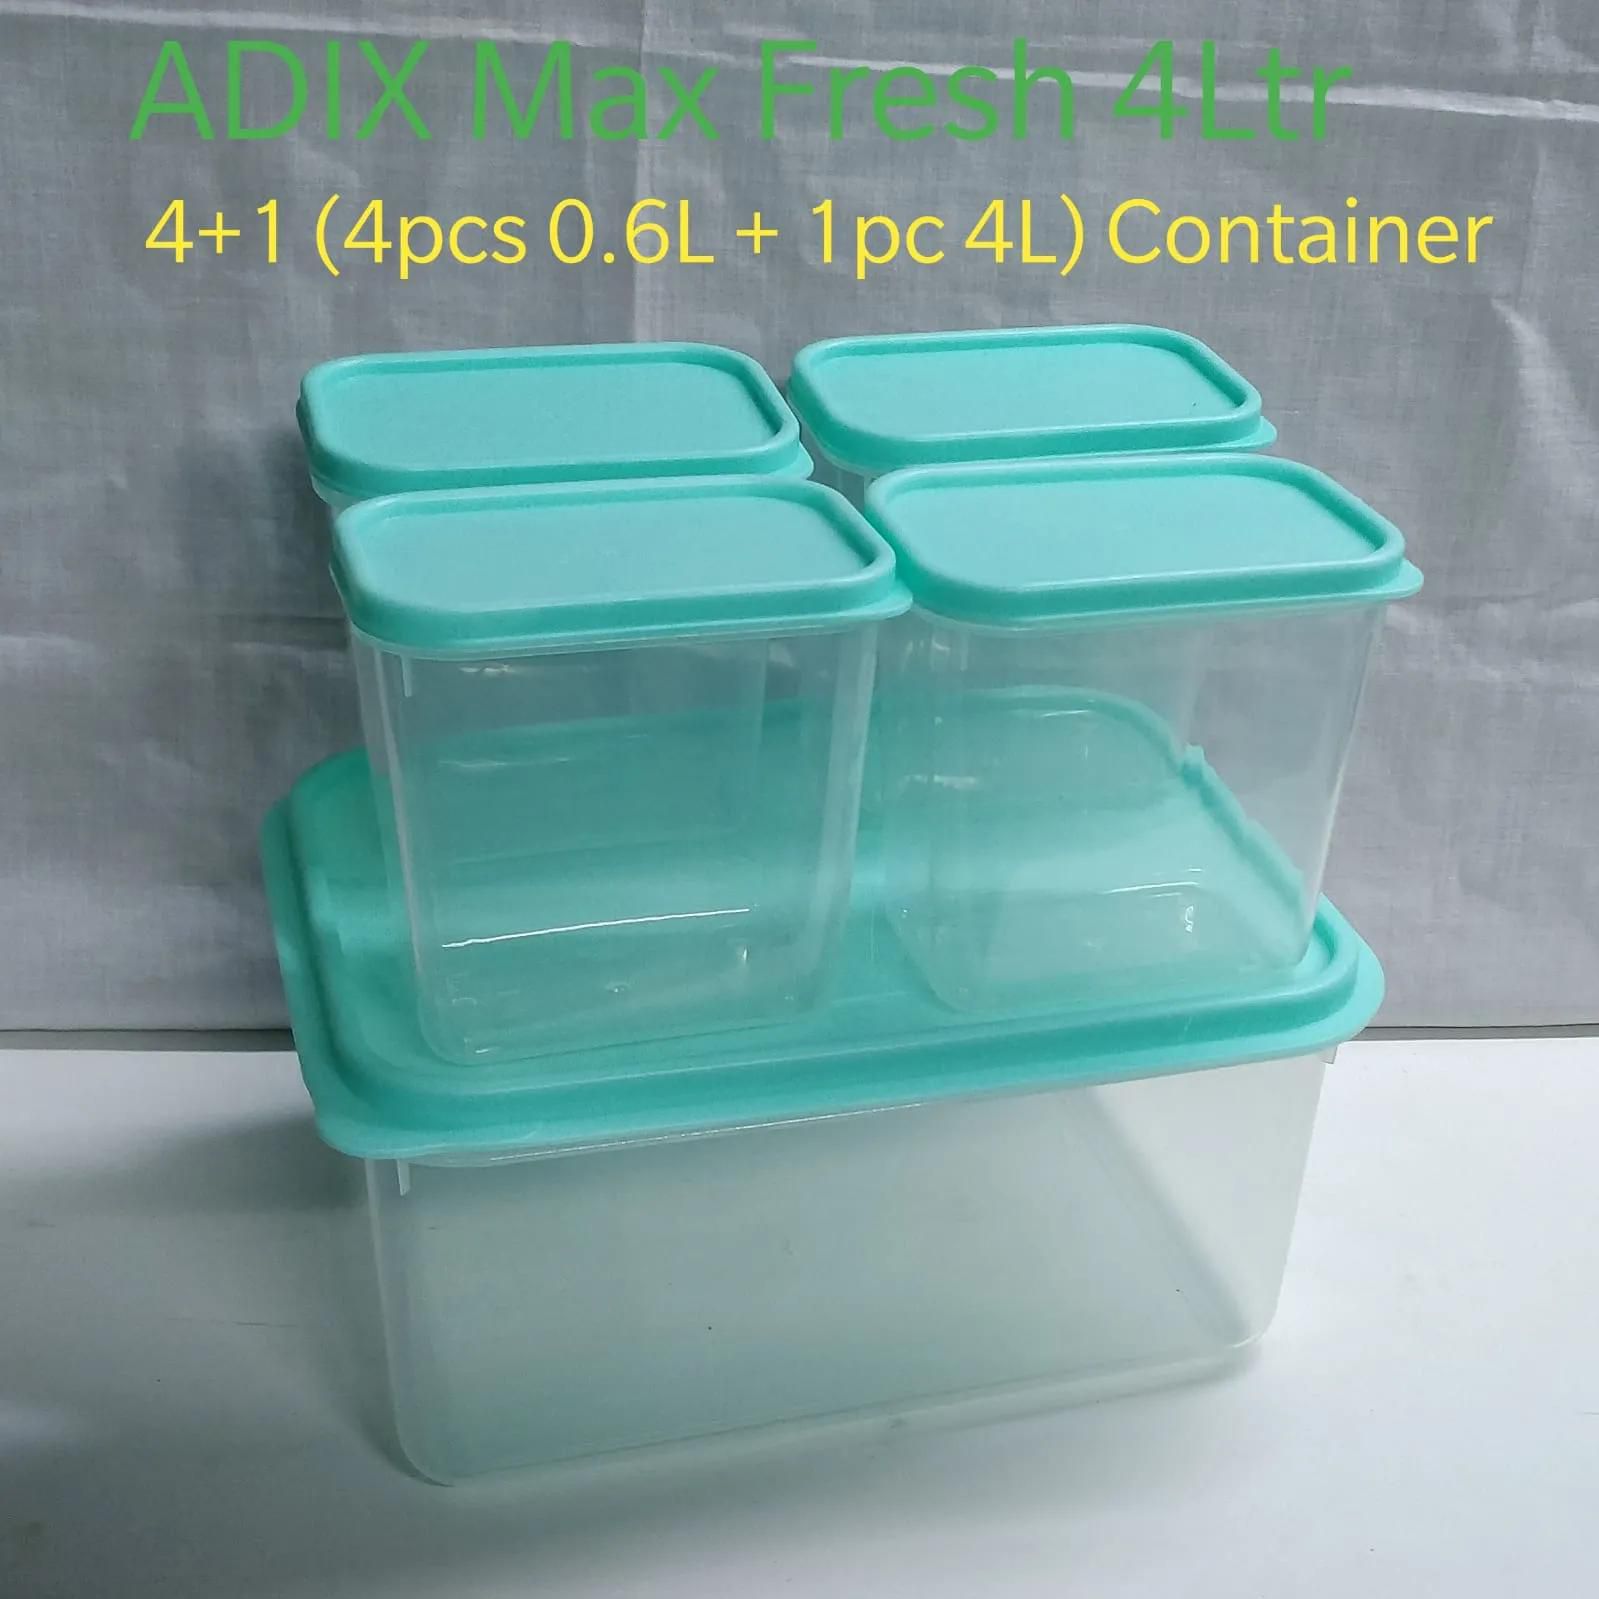 Set of 5pcs ADIX Max fridge kitchen  Fresh storage containers  (1pc-4L+ 4pcs 0.6L)